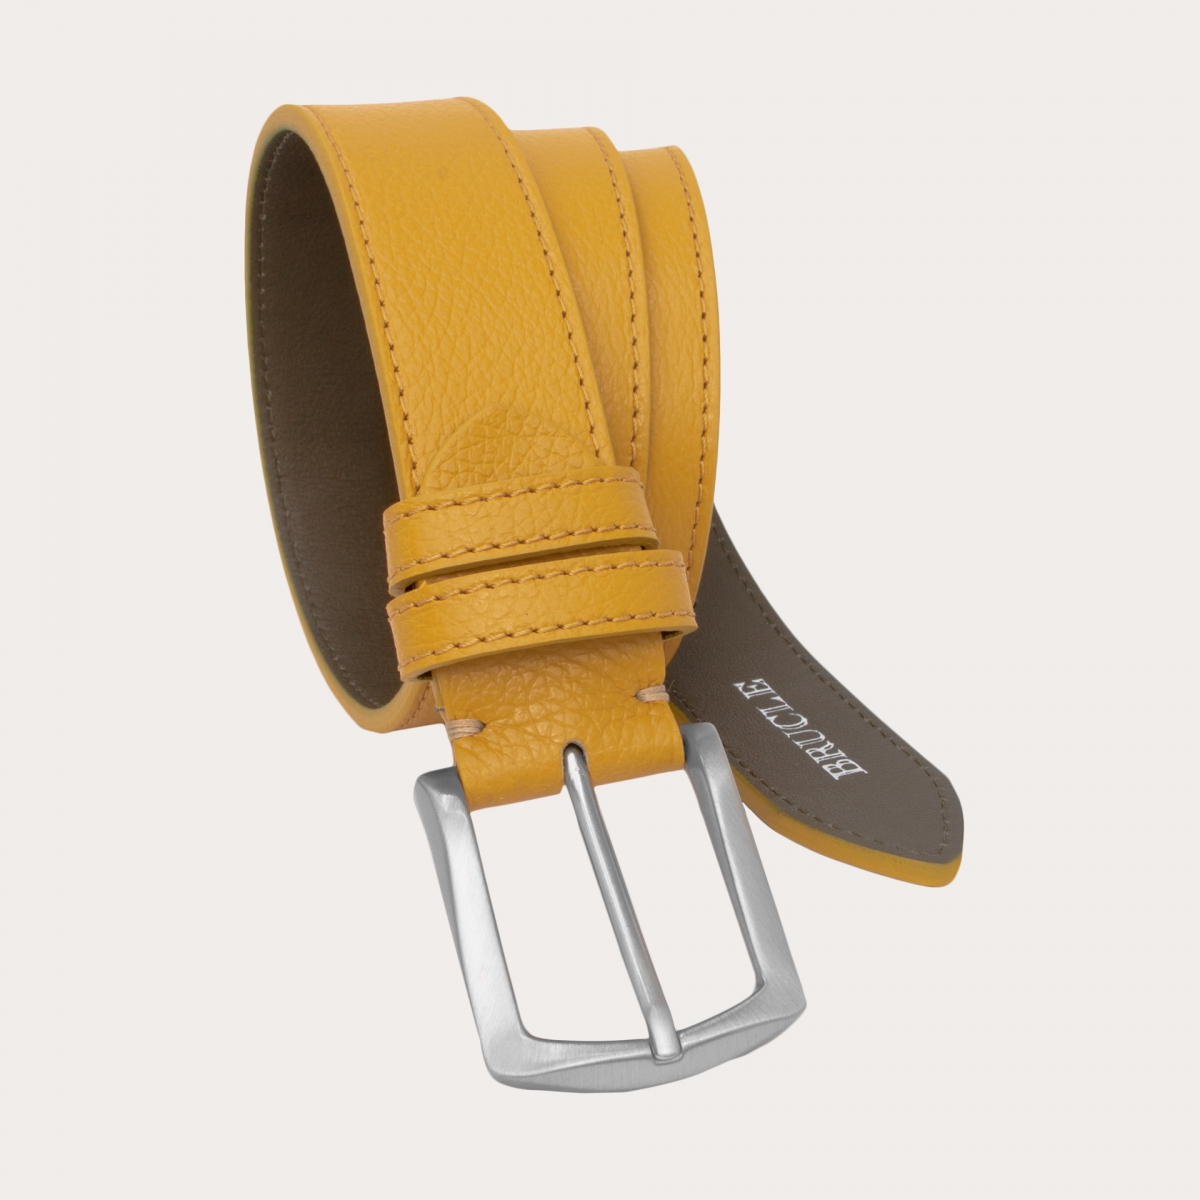 BRUCLE genuine leather belt yellow oca